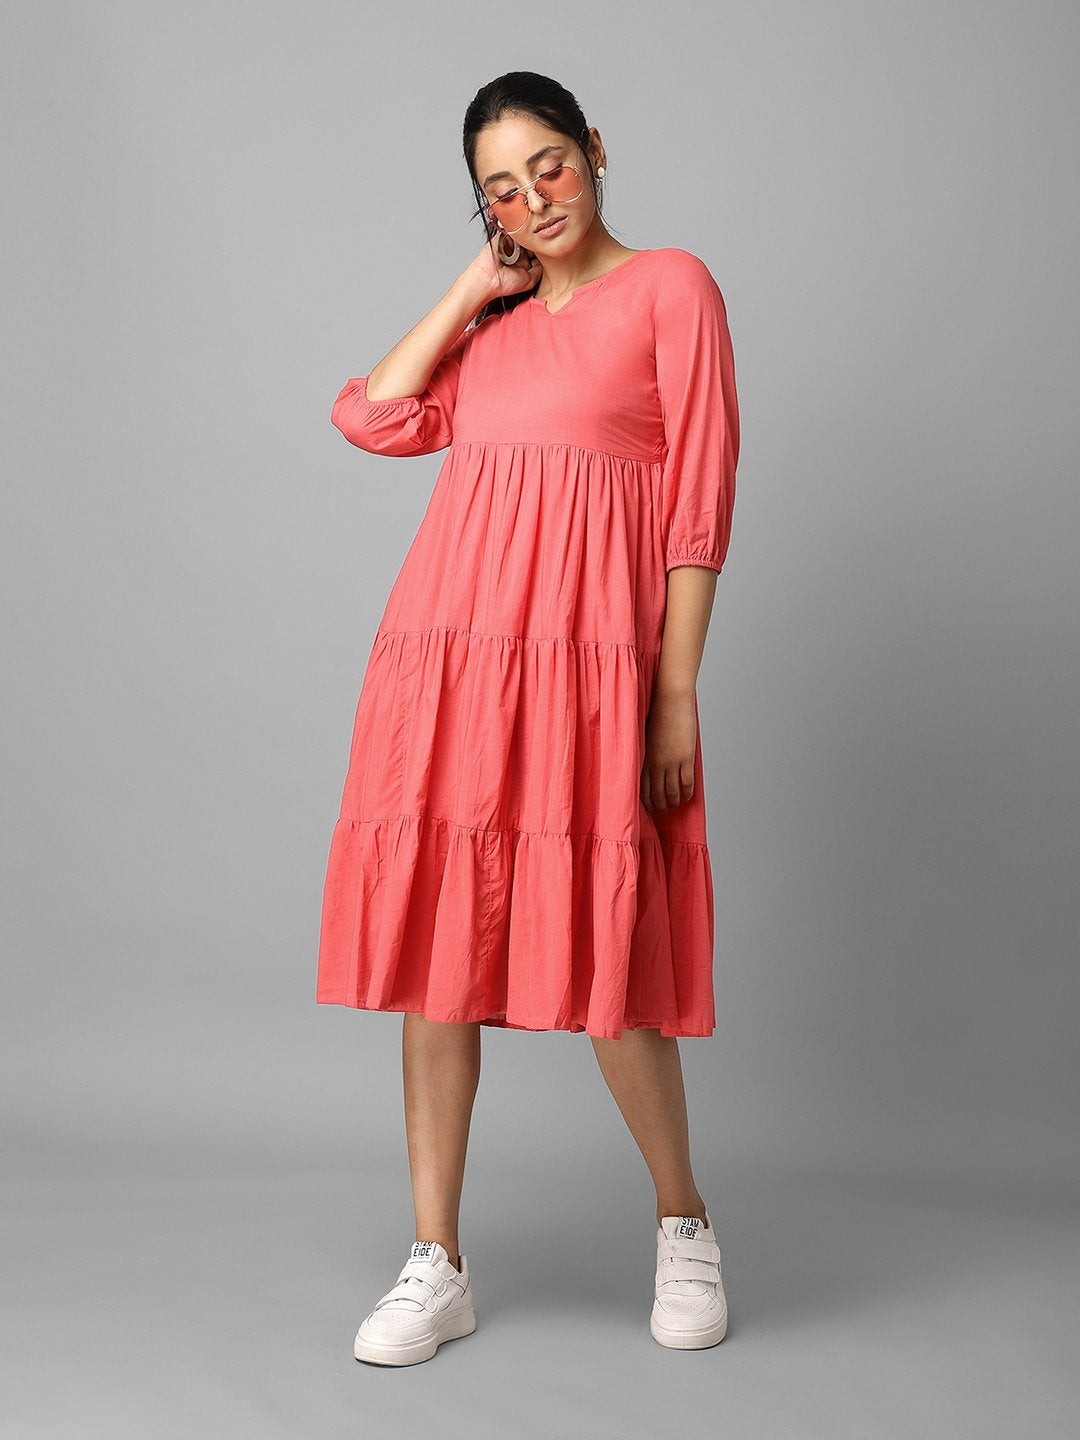 Women's Solid Pink Tiered A-Line Dress - Azira